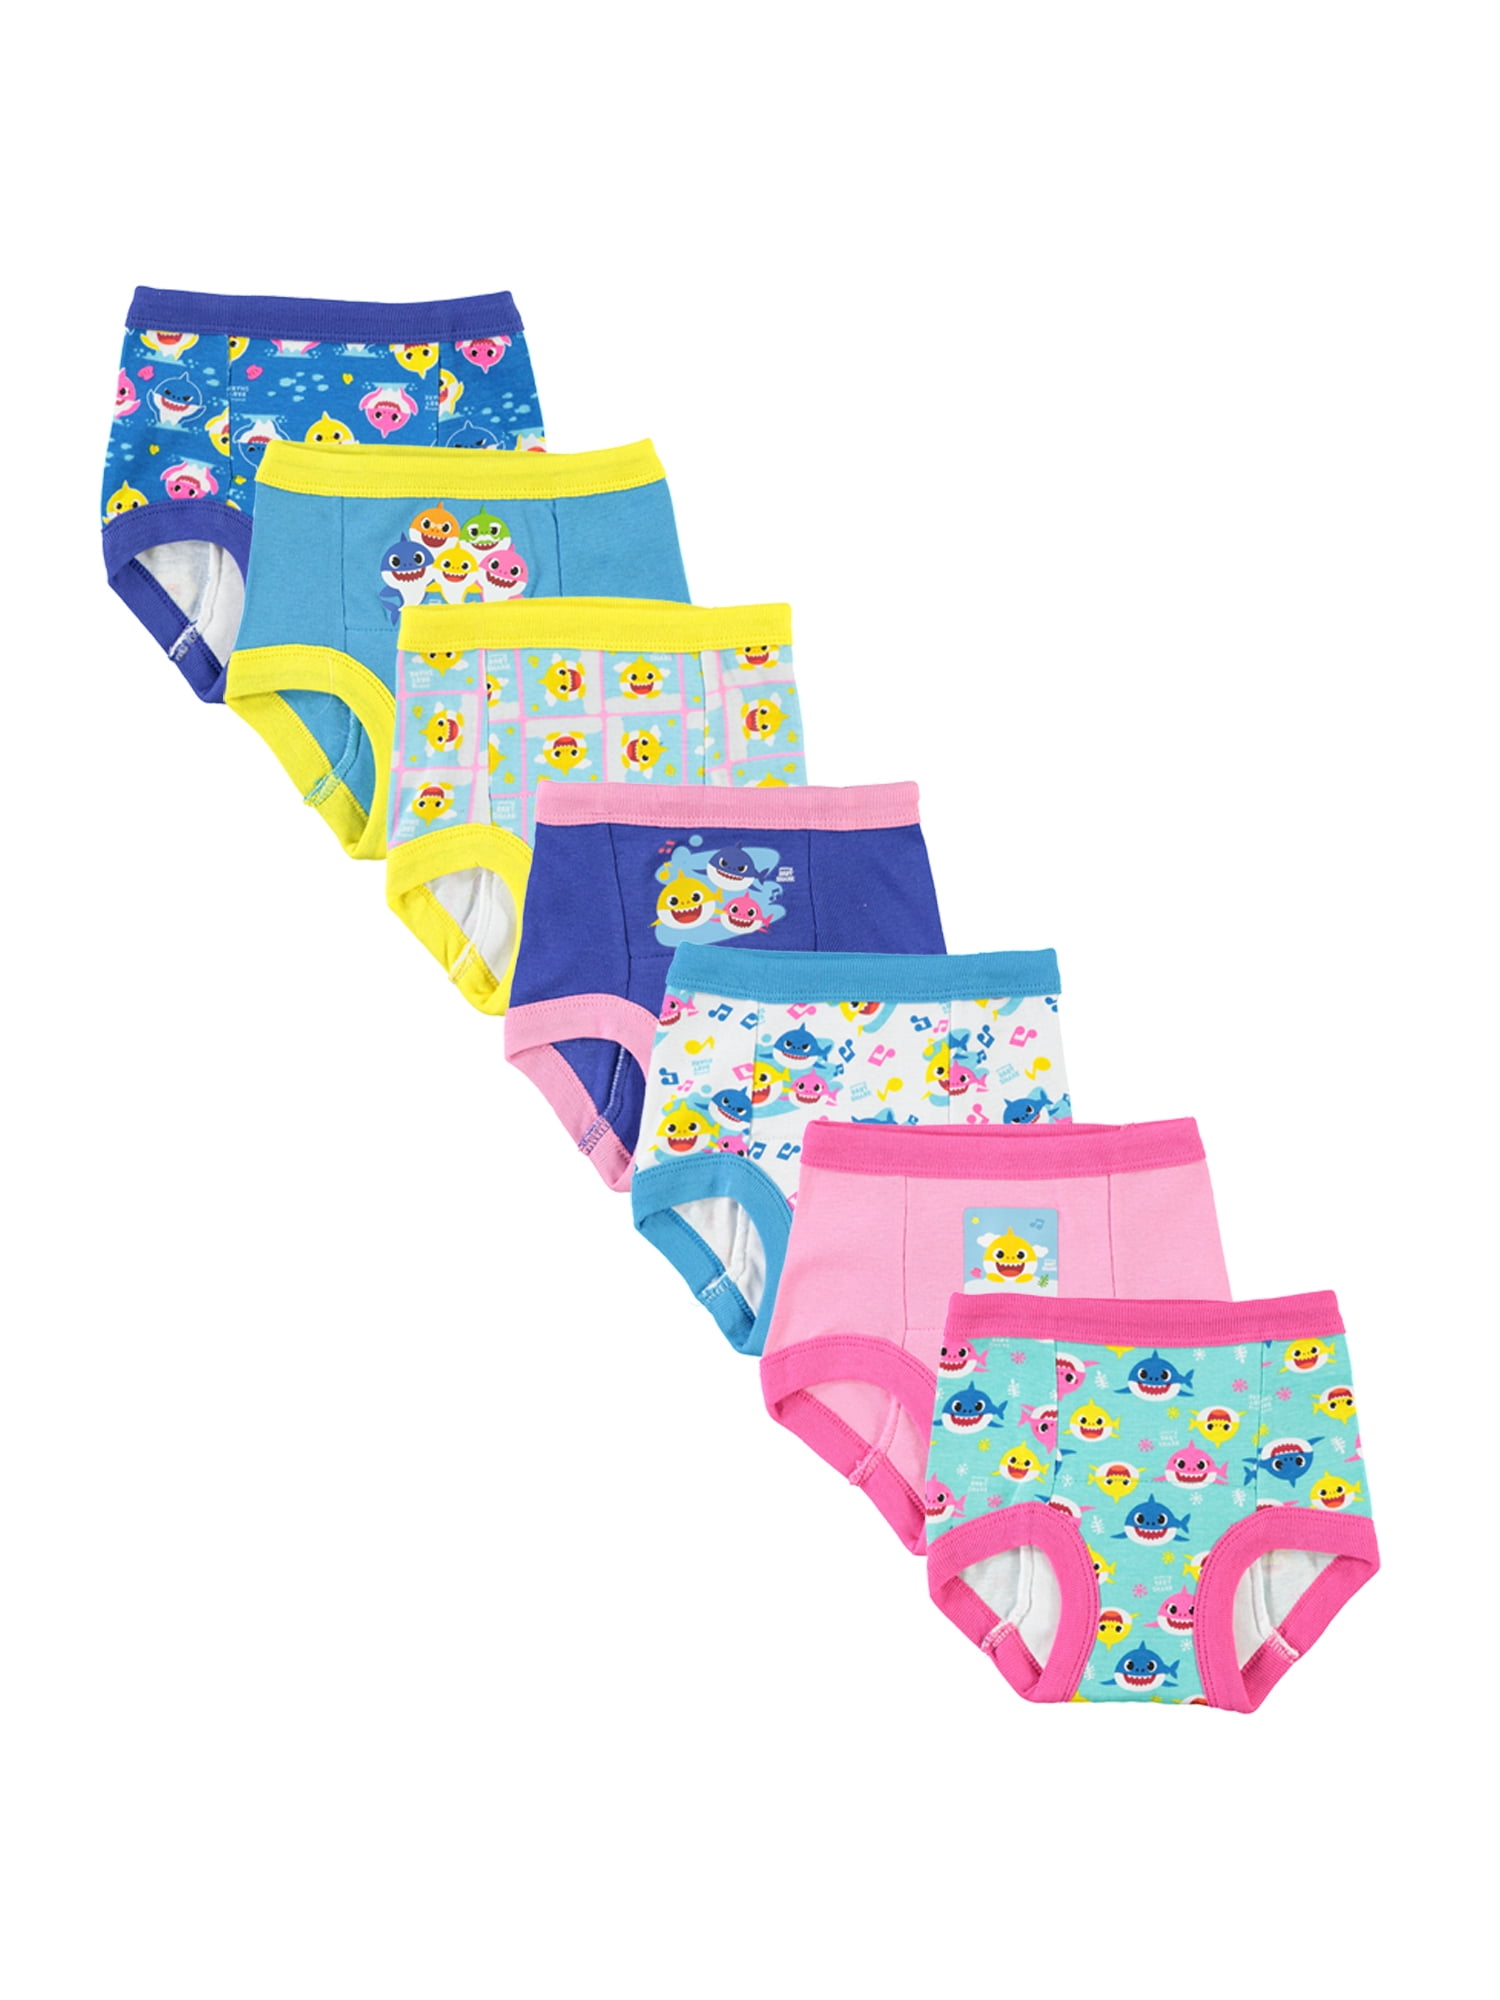 Disney Minnie Mouse Girls Potty Training Pants 7-pack Panties Underwear Toddler 